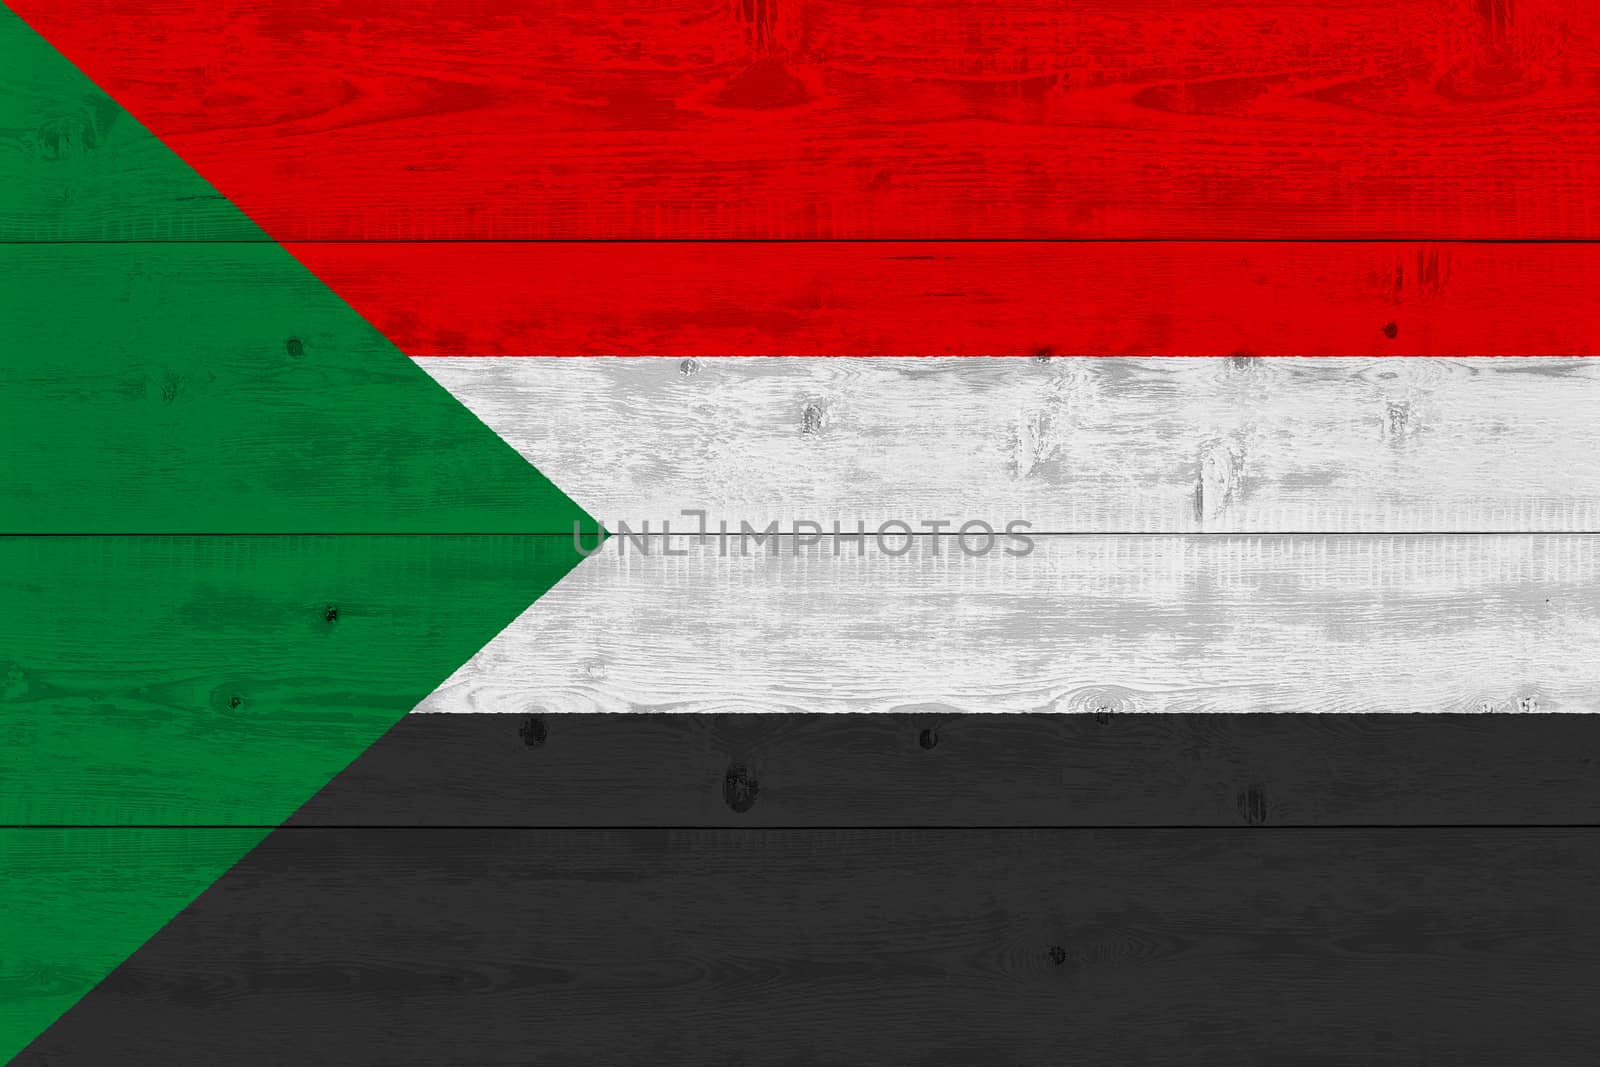 Sudan flag painted on old wood plank. Patriotic background. National flag of Sudan